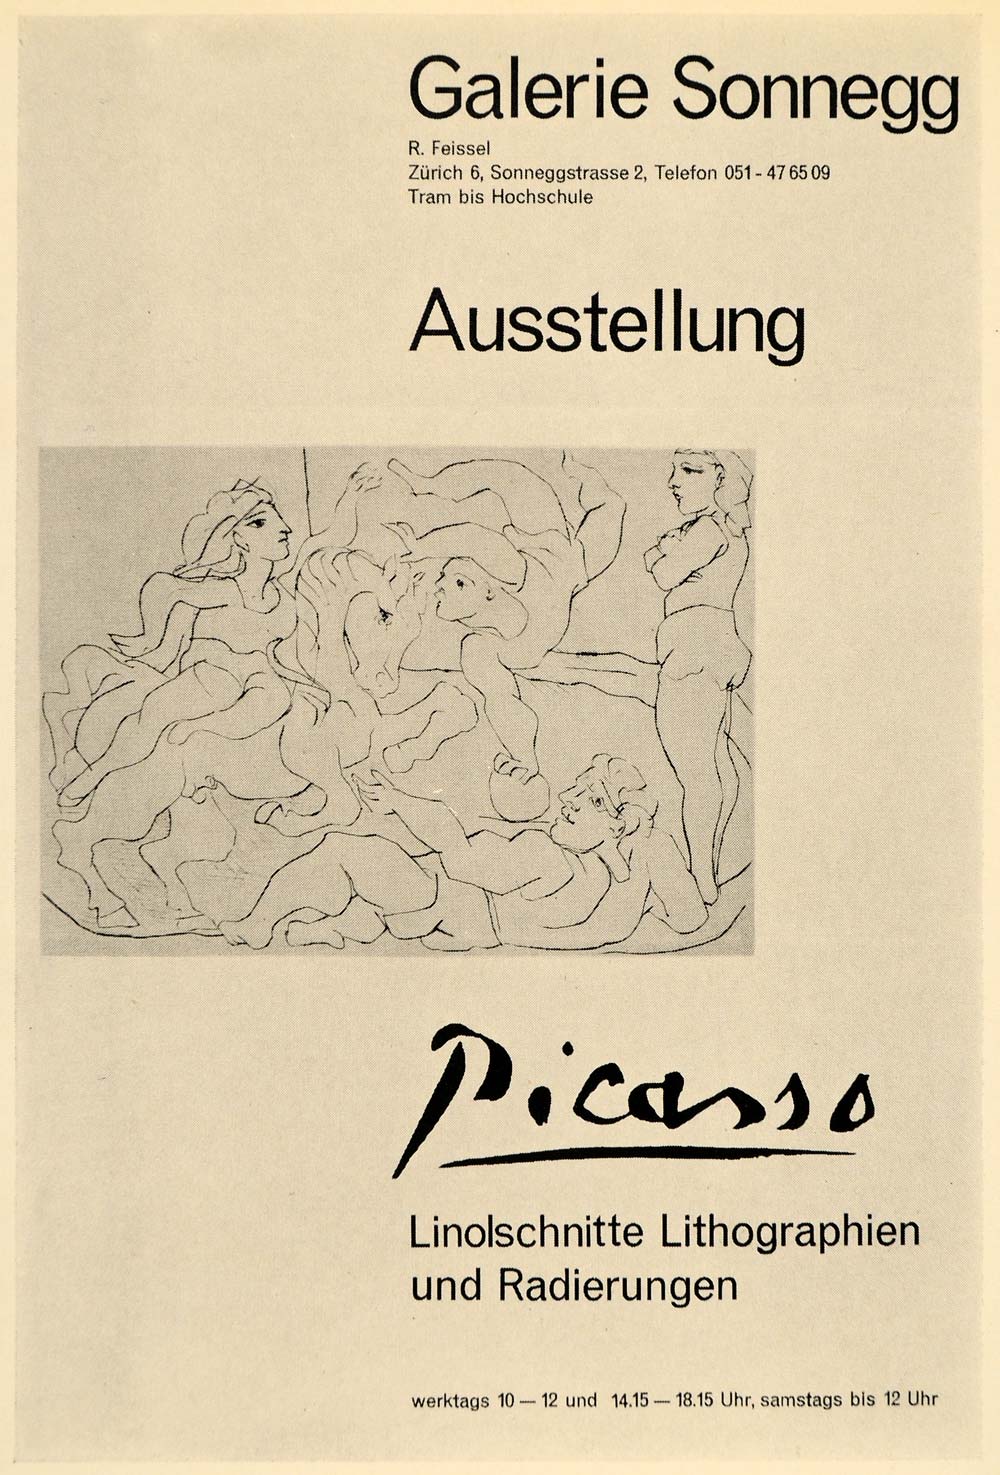 1971 Print Pablo Picasso Galerie Sonnegg Zurich Poster - ORIGINAL PIC3